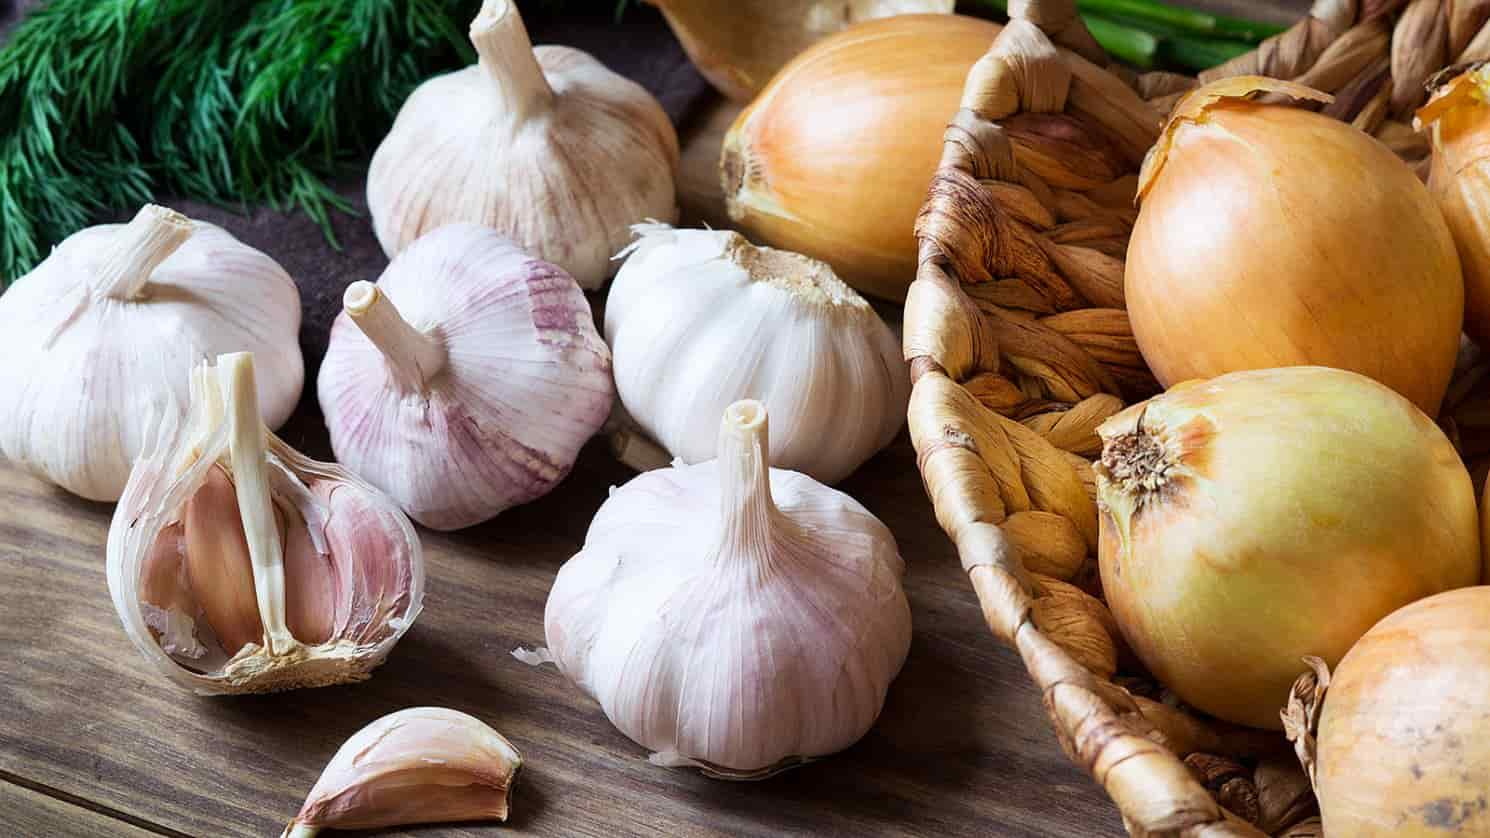 onions-garlic-191007-1490x838